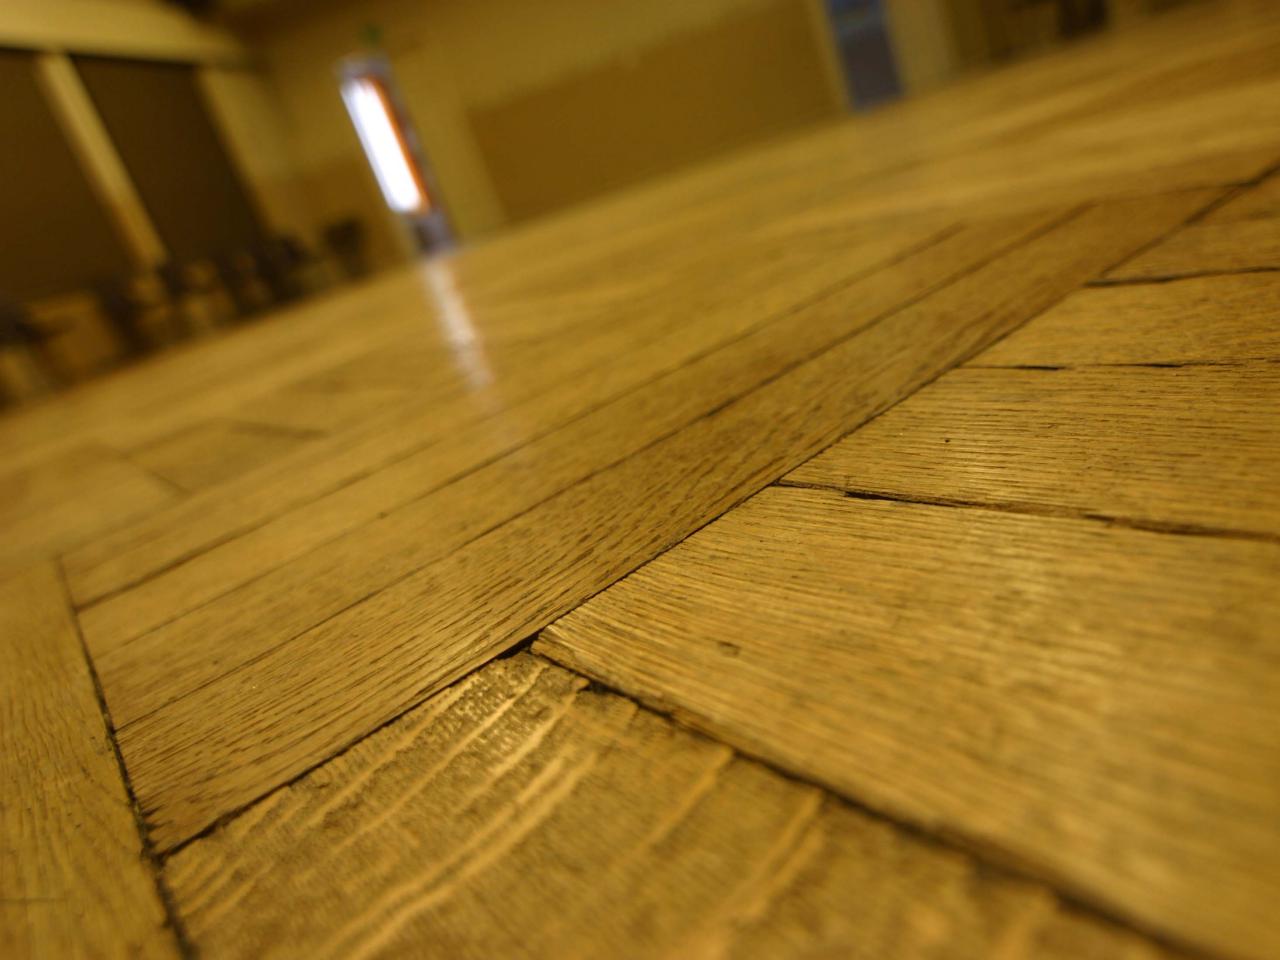 How To Fix A Squeaky Floor, What To Put Under Hardwood Floor